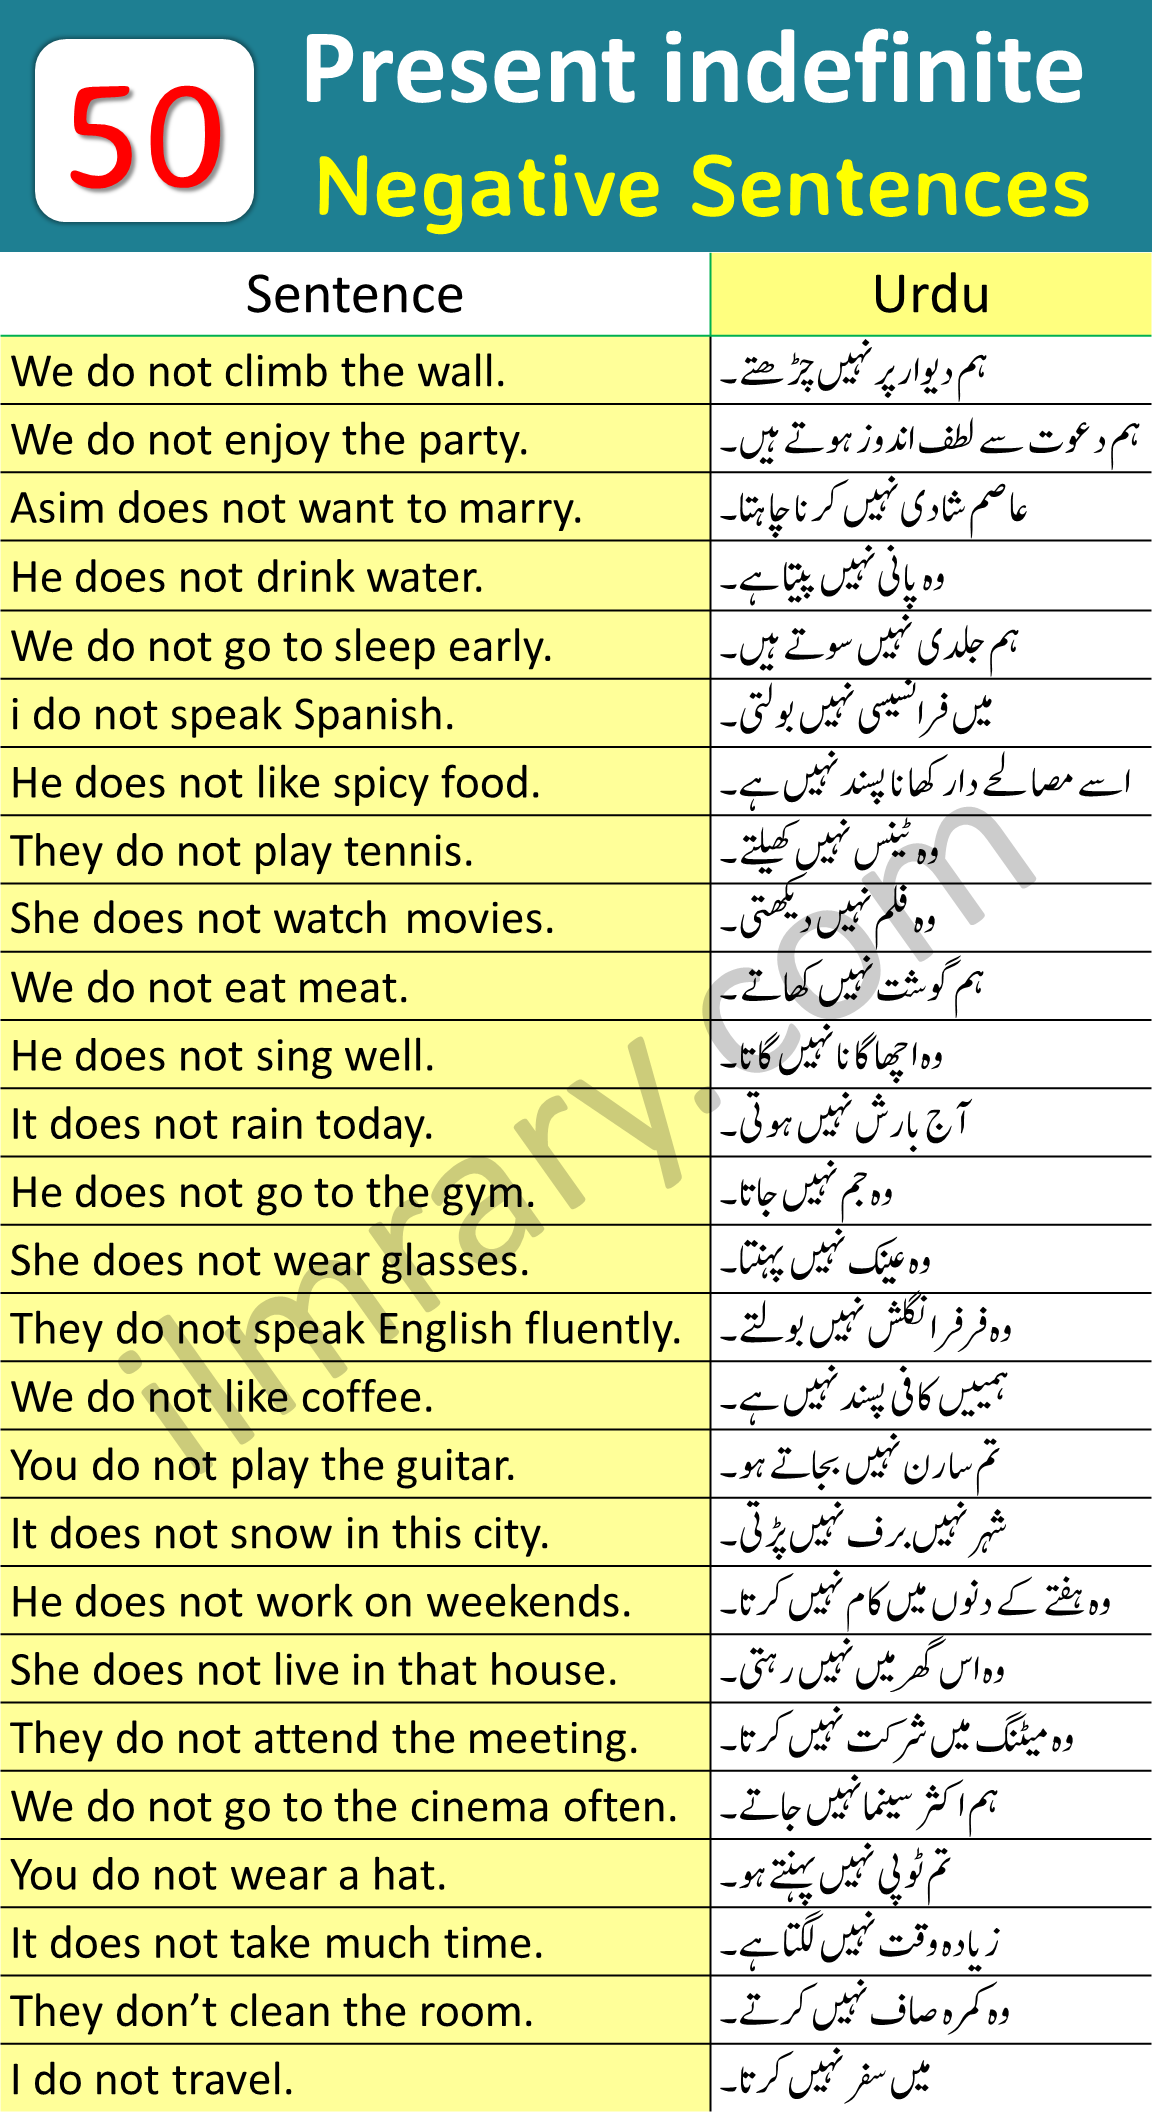 150 Negative Sentences for Present Indefinite Tense With Urdu and Hindi Translation